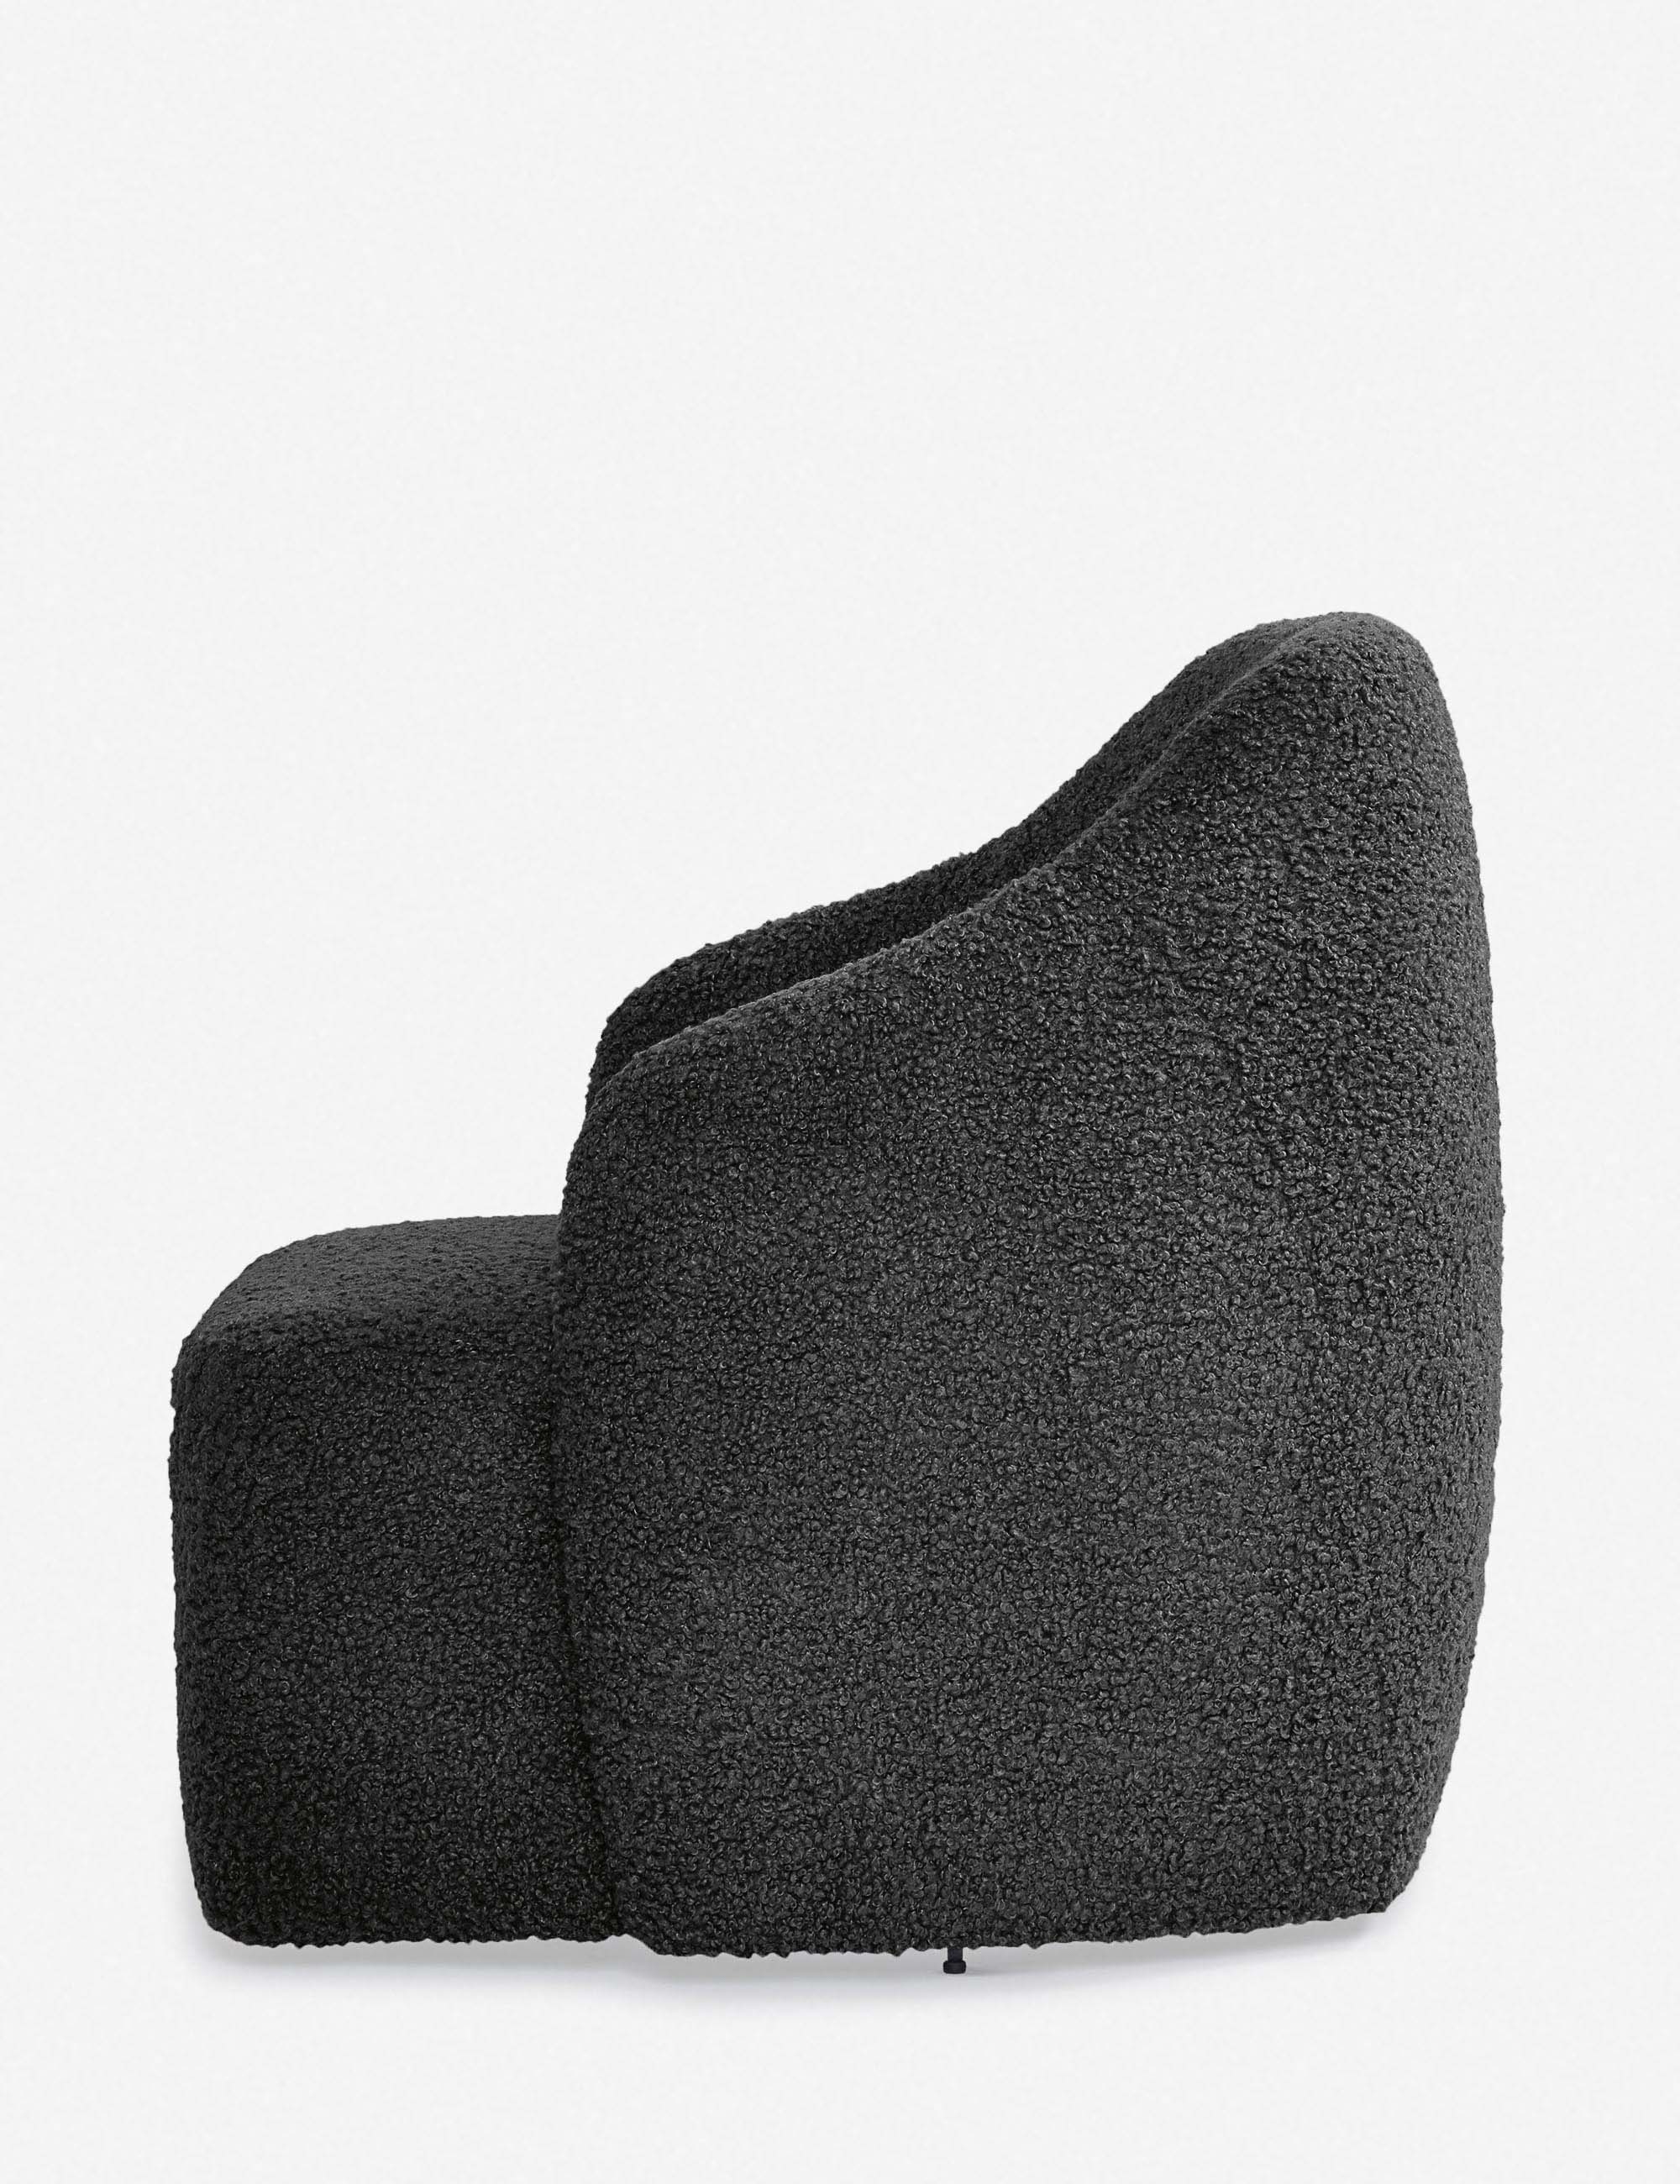 Tobi Swivel Chair - Image 6